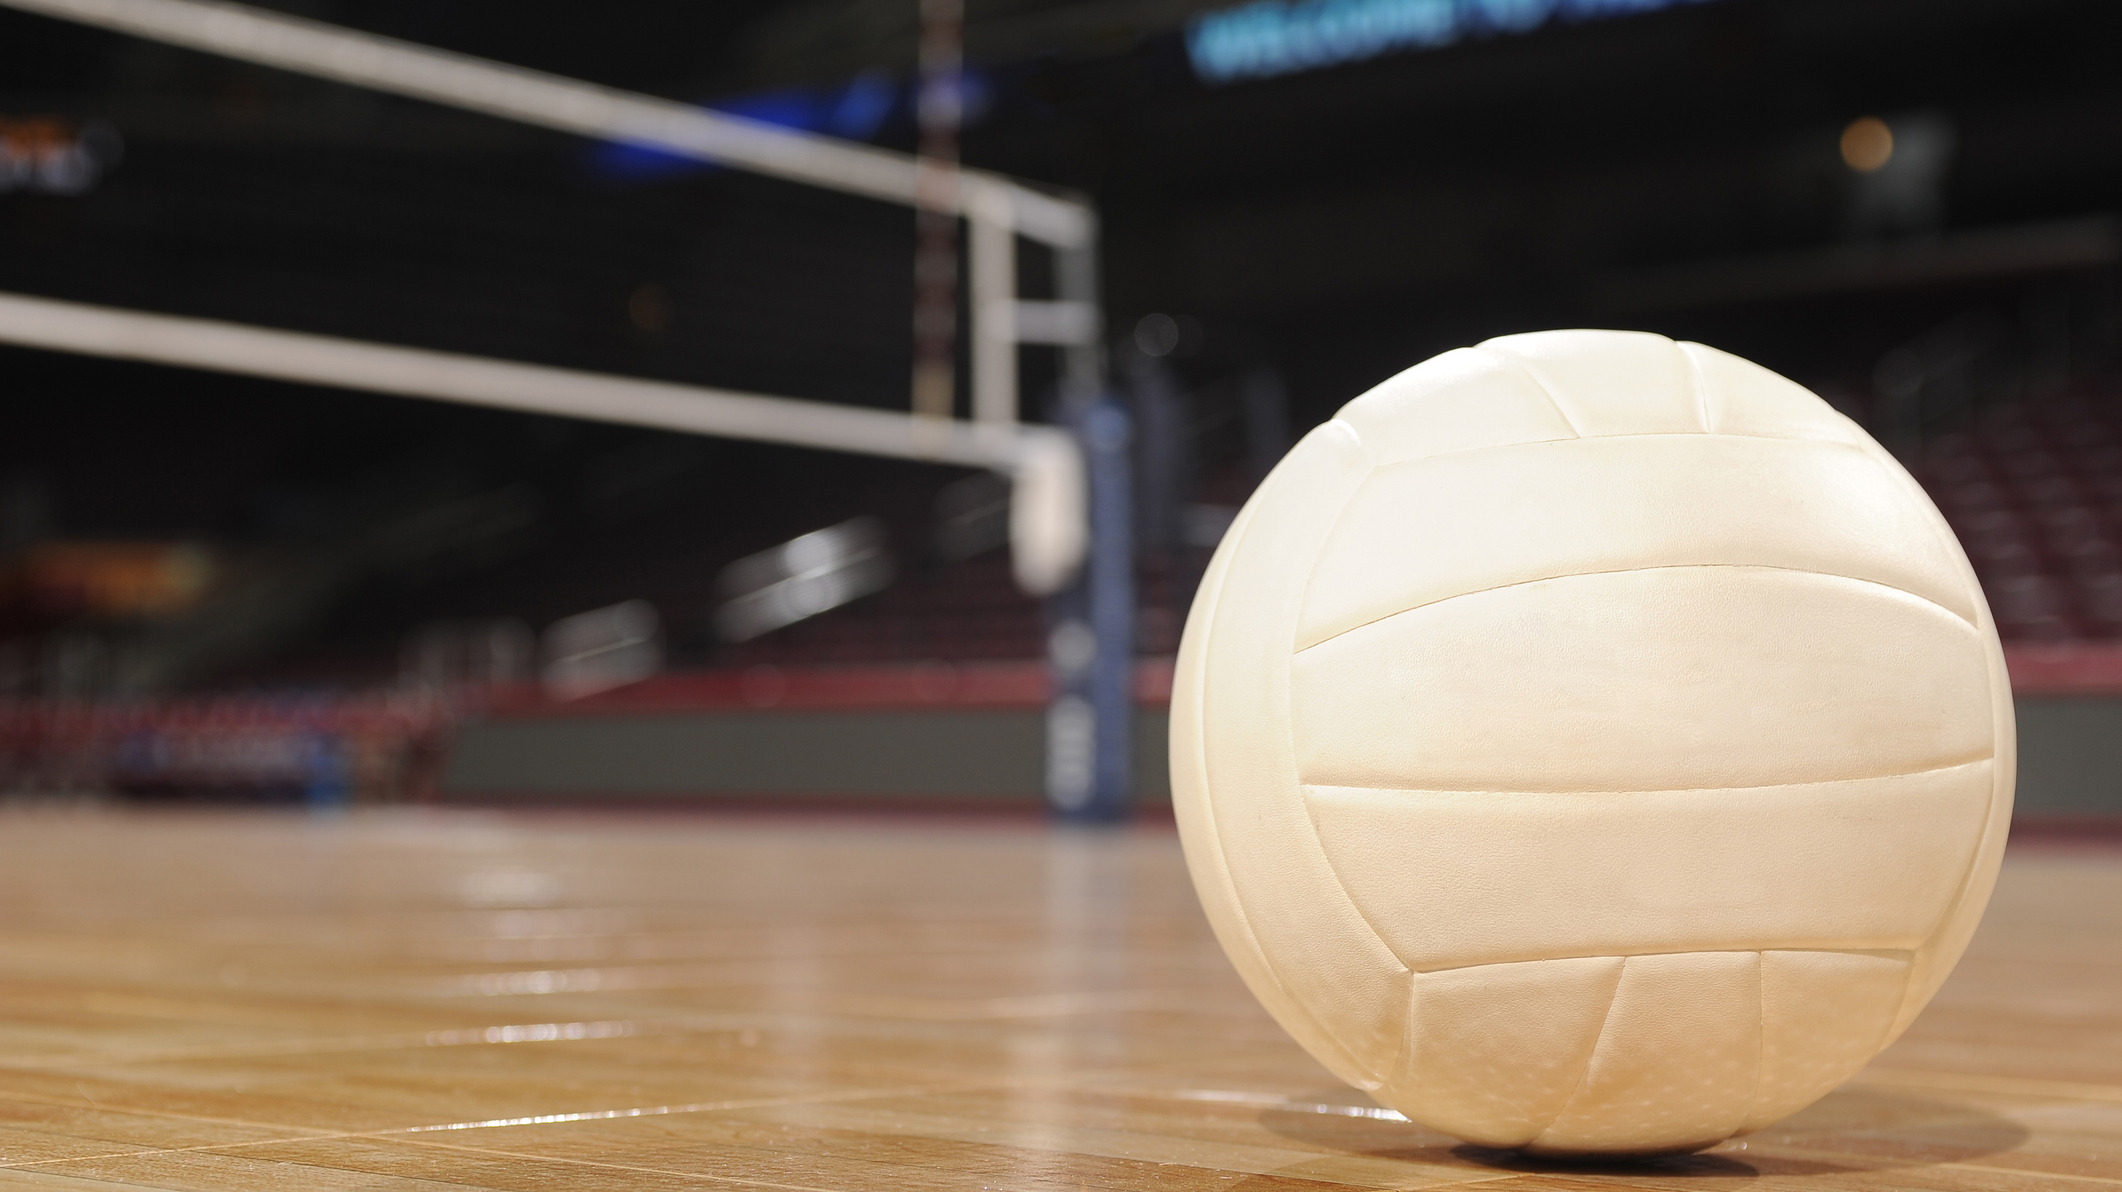 Volleyball on Wood Floor